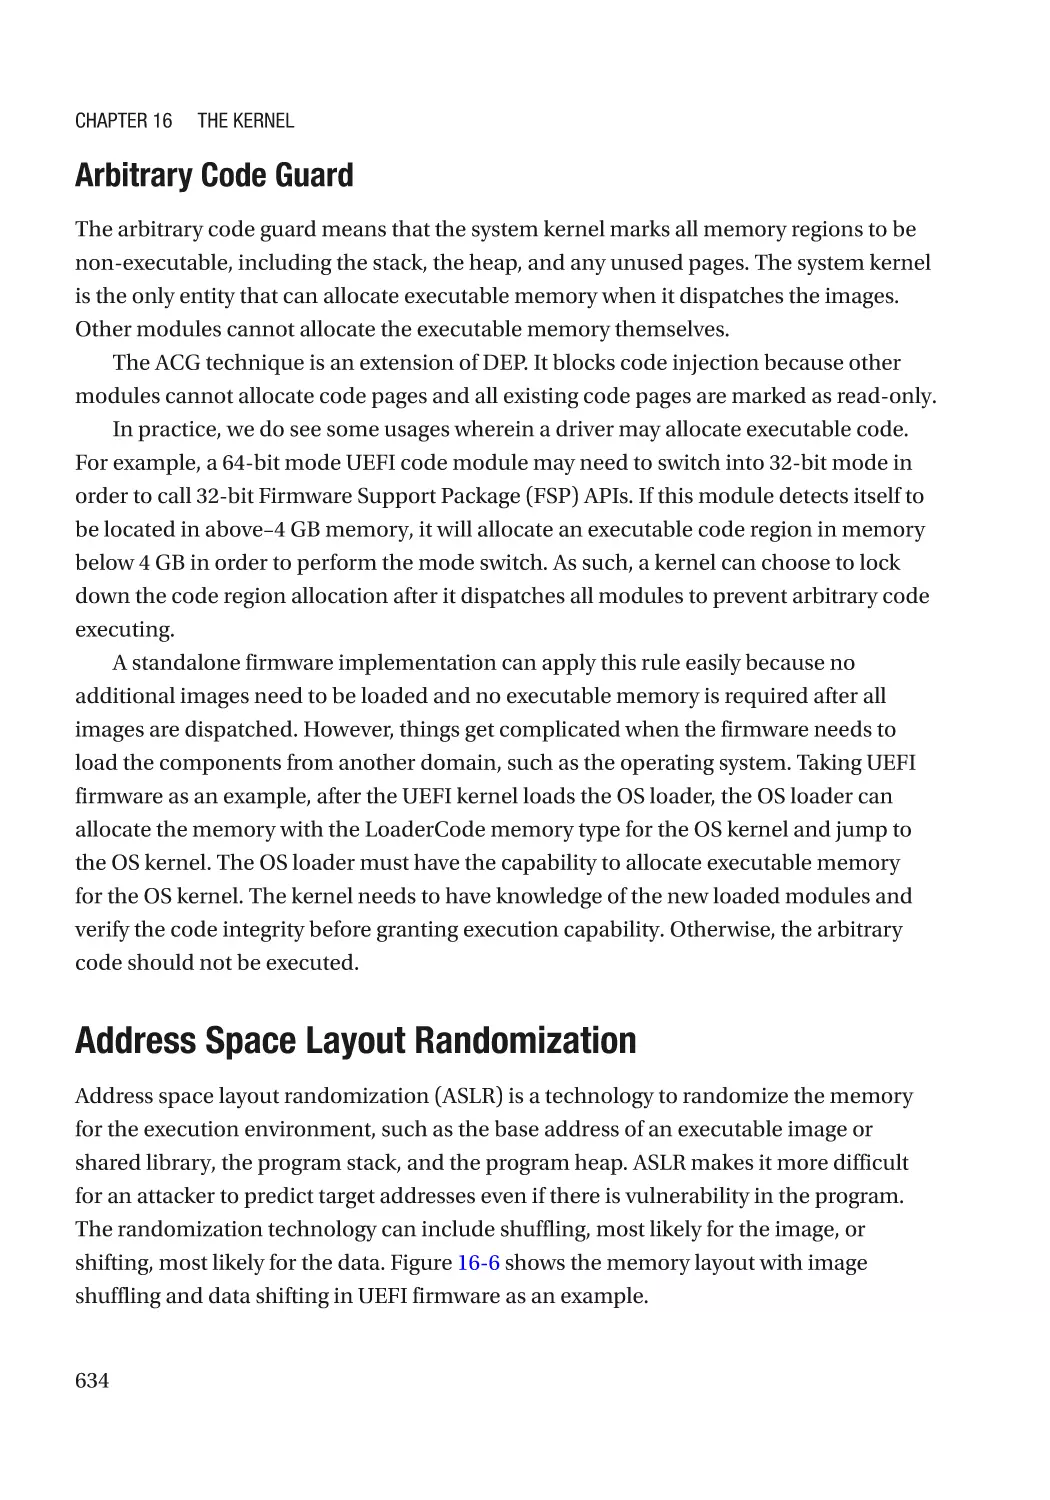 Arbitrary Code Guard
Address Space Layout Randomization